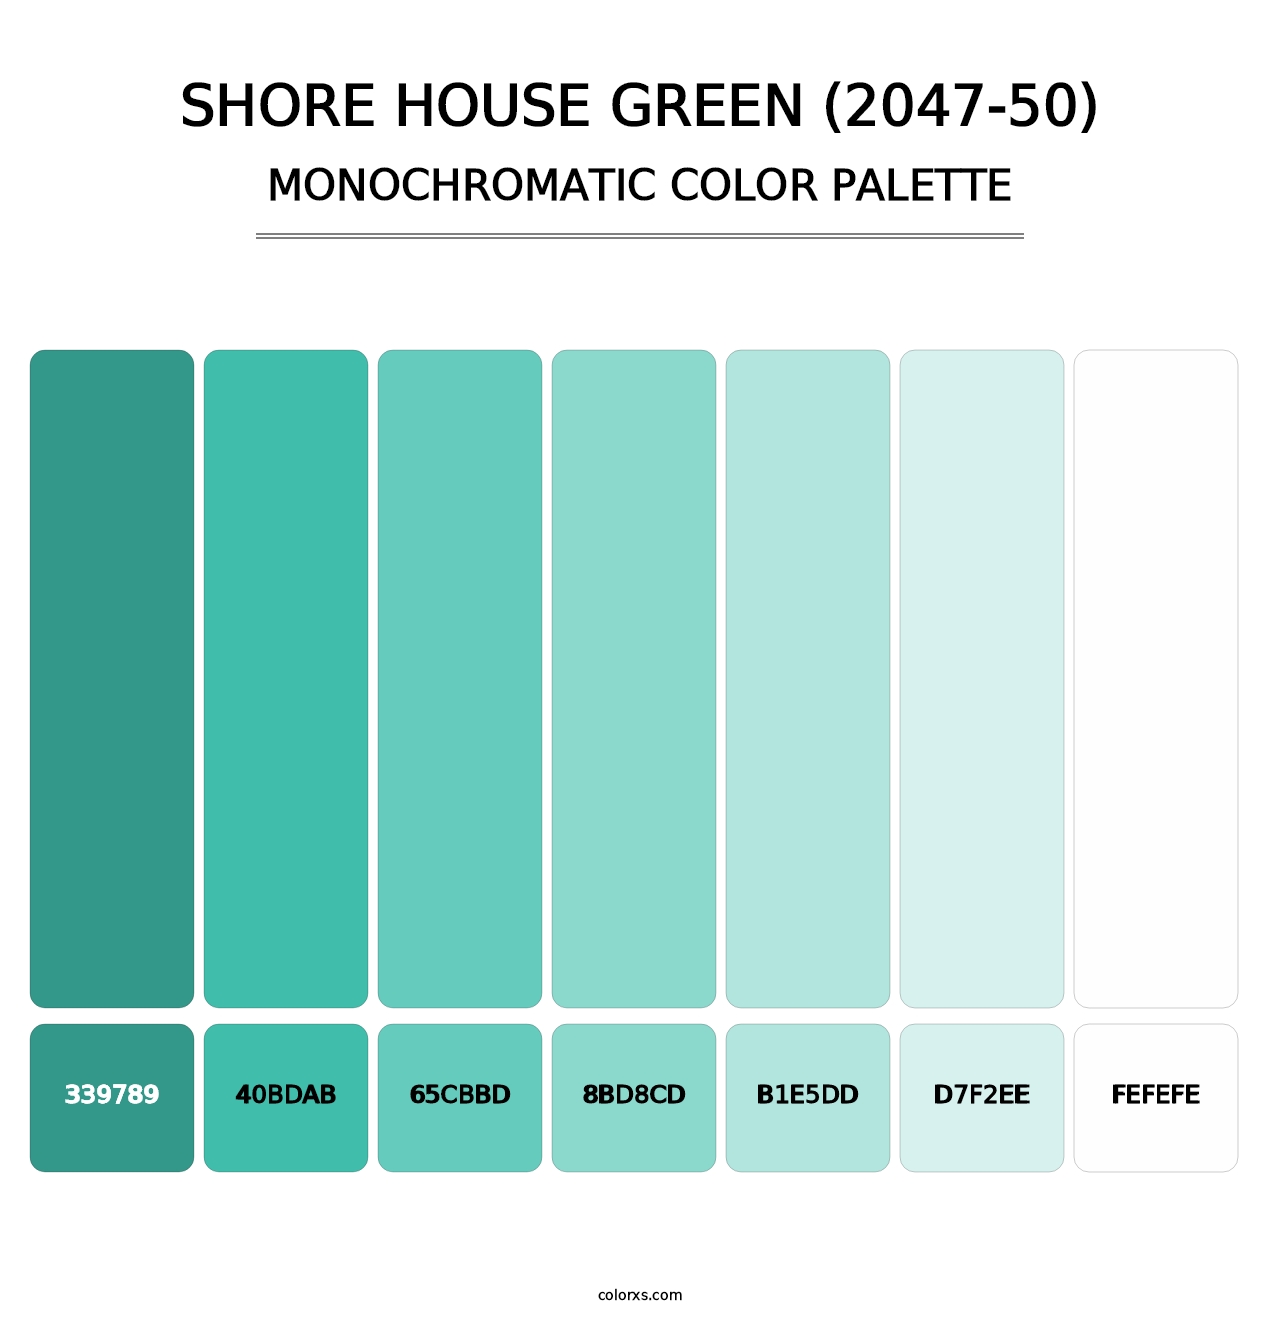 Shore House Green (2047-50) - Monochromatic Color Palette